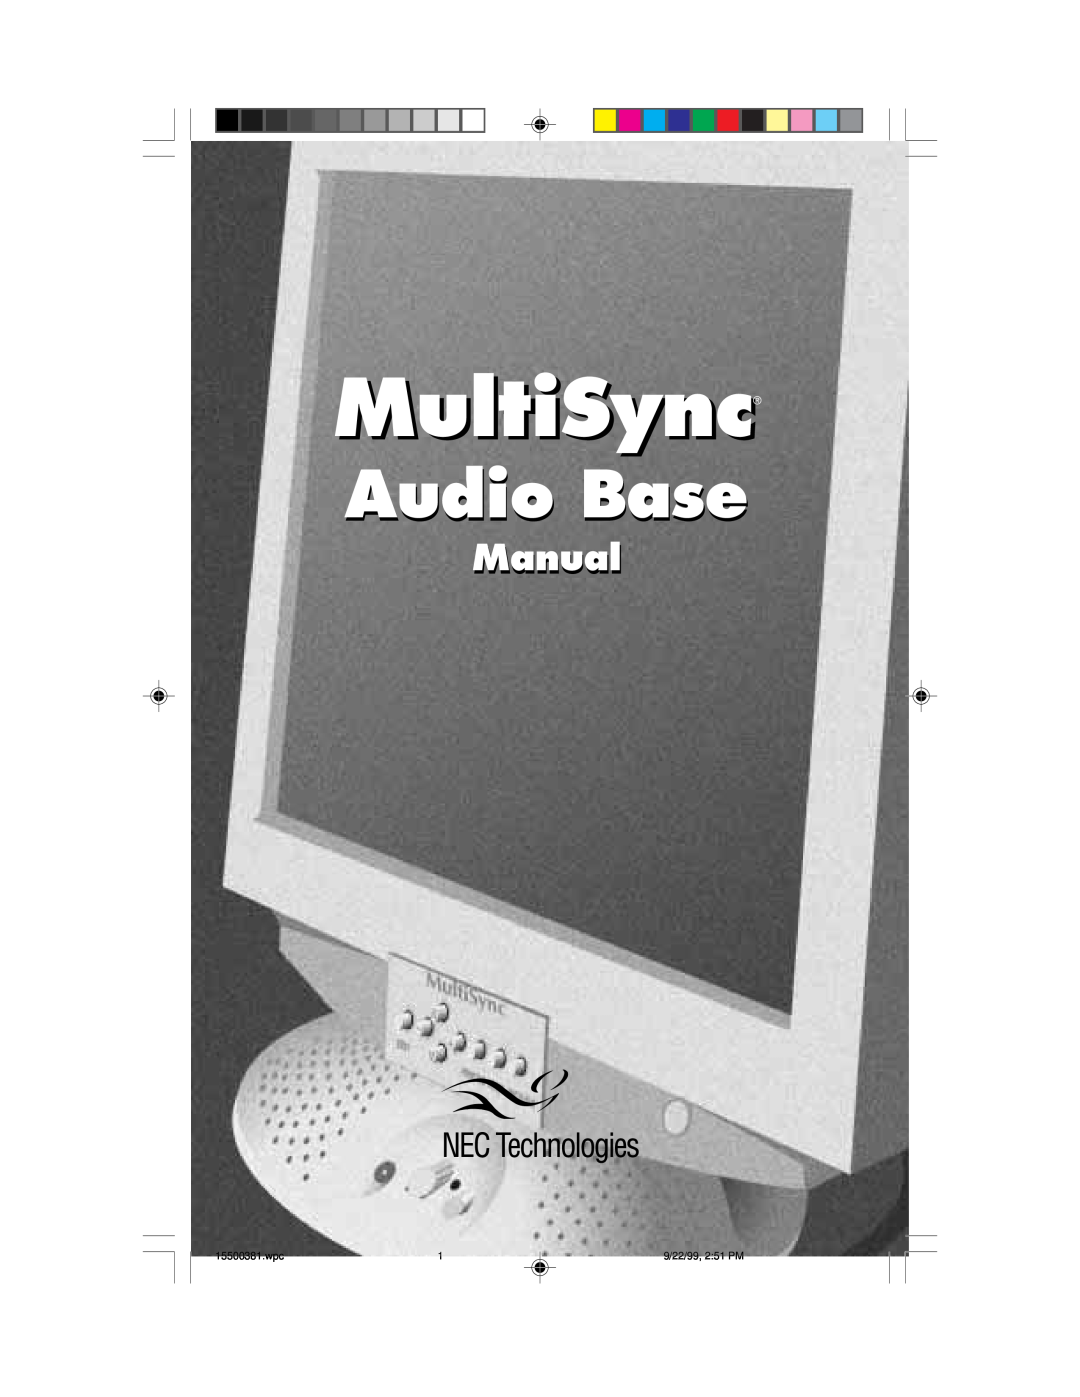 NEC FE700M manual MultiSync, Audio Base, Manual, 15500381.wpc, 9/22/99, 251 PM 